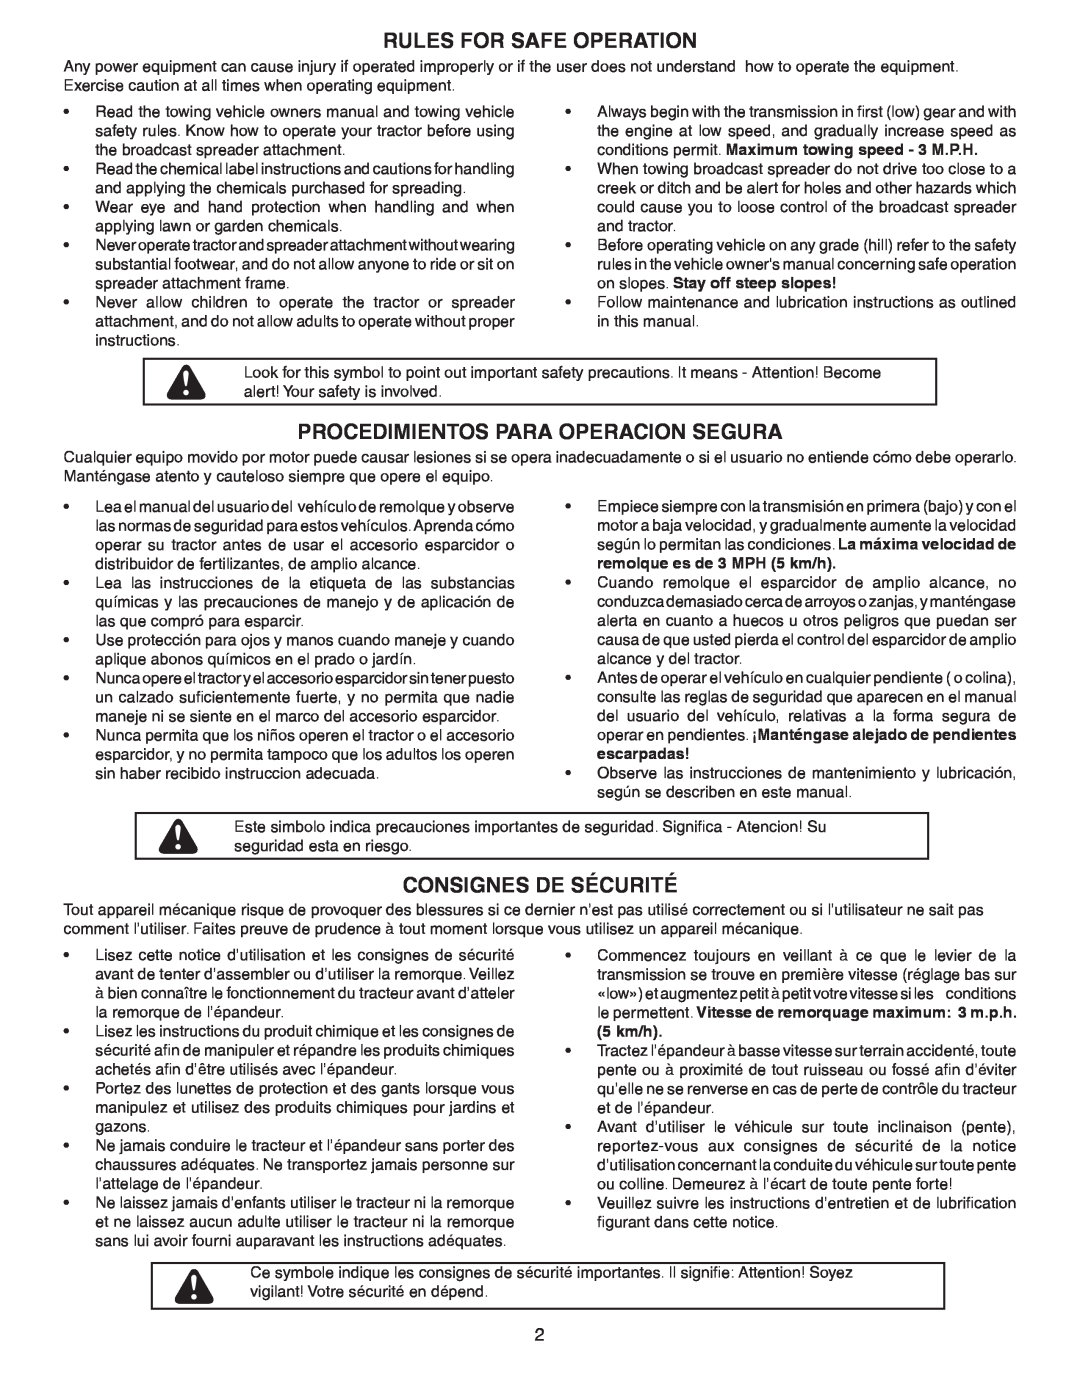 Agri-Fab 45-0410 owner manual Rules For Safe Operation, Procedimientos Para Operacion Segura, Consignes De Sécurité 